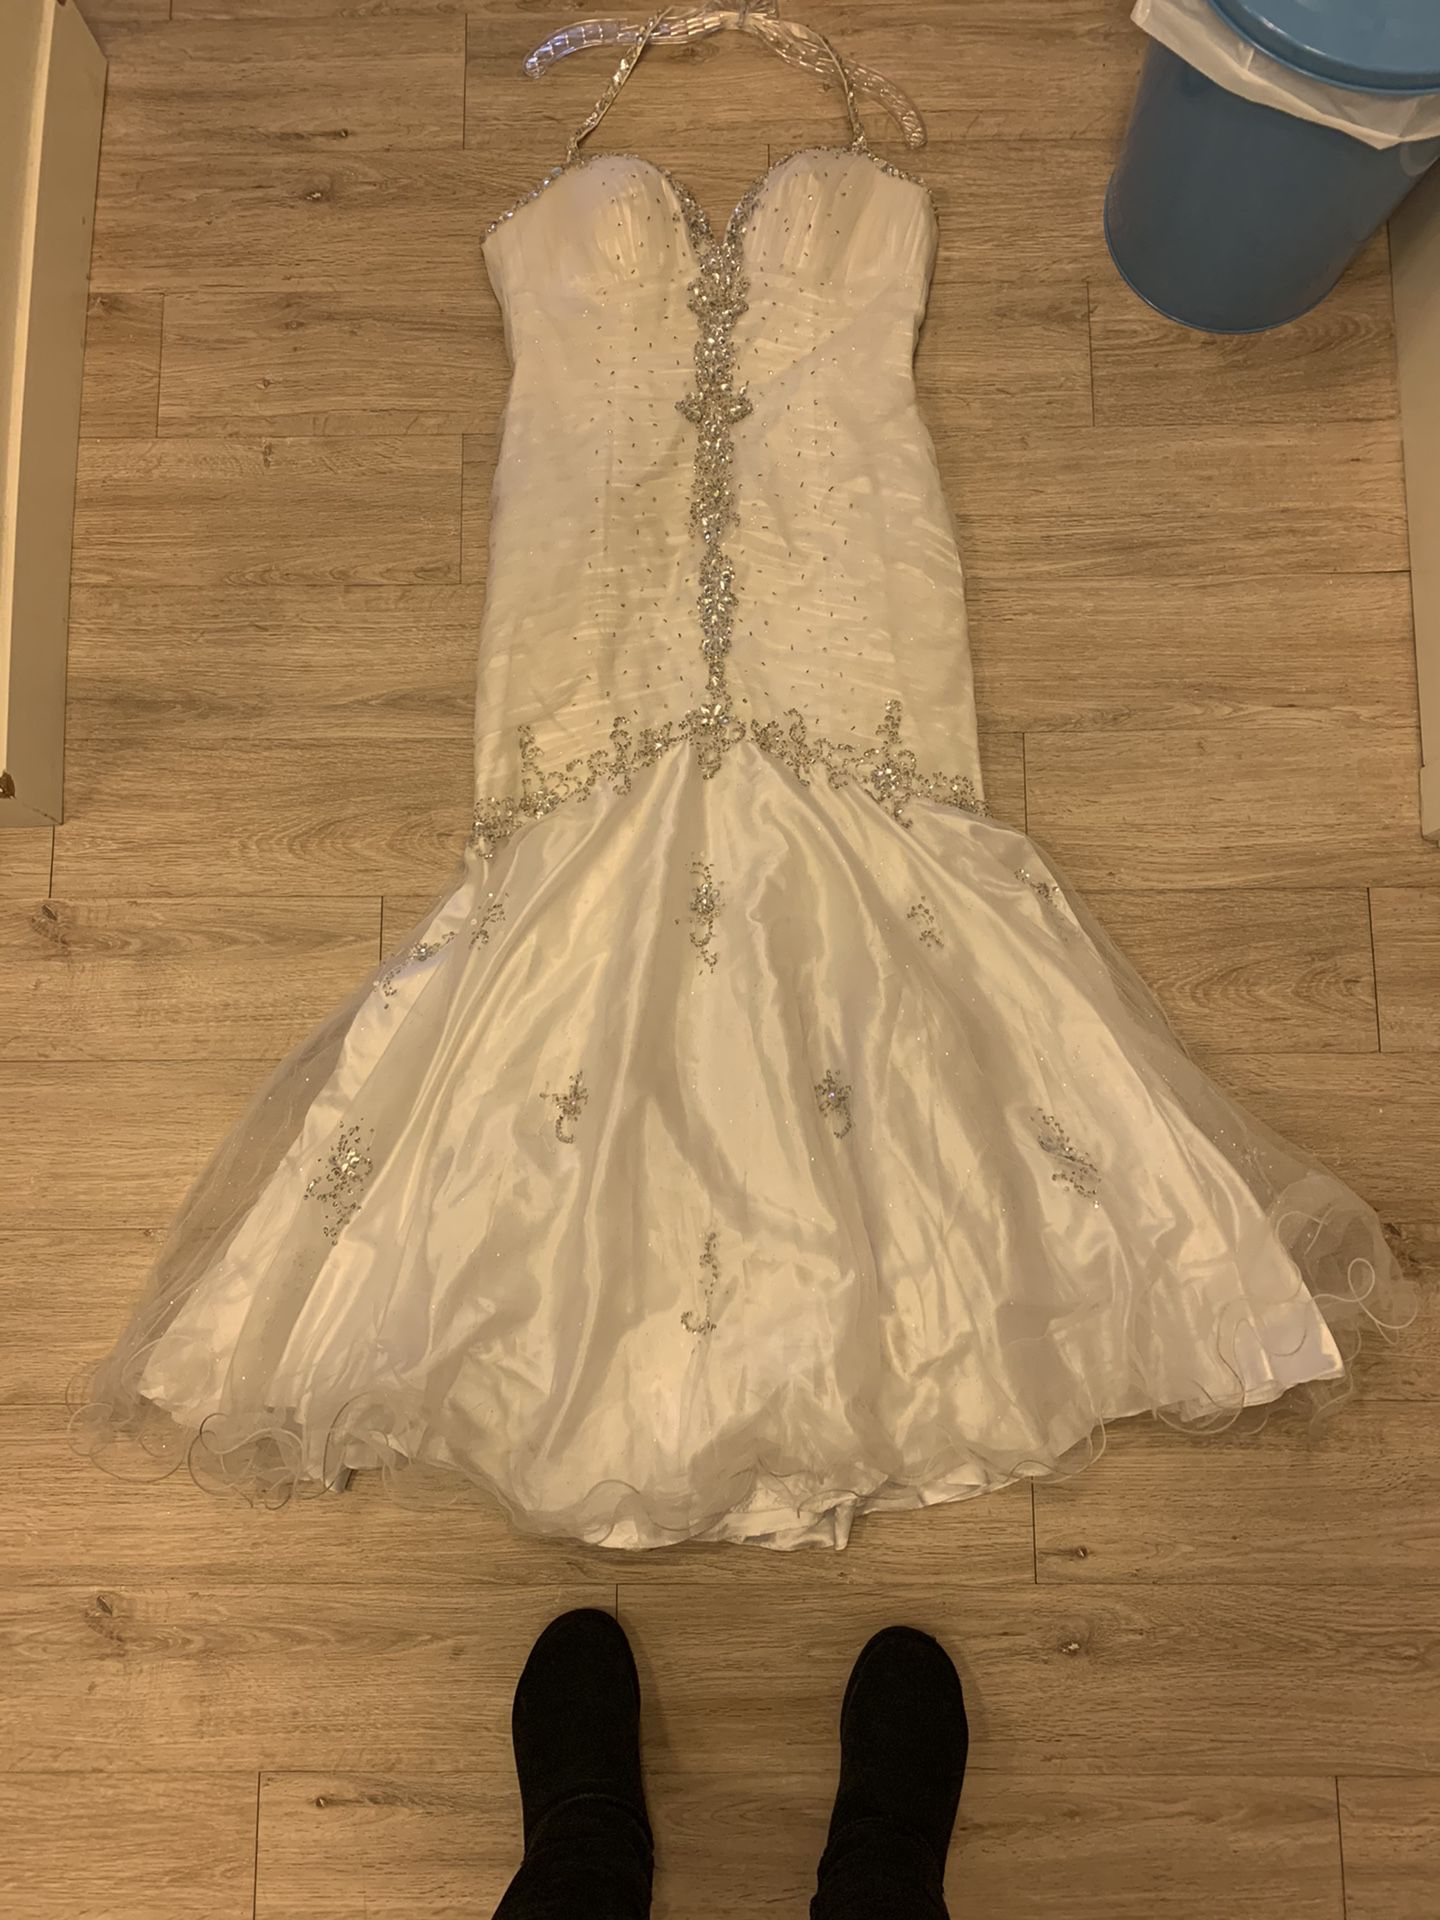 Night event / wedding party dress